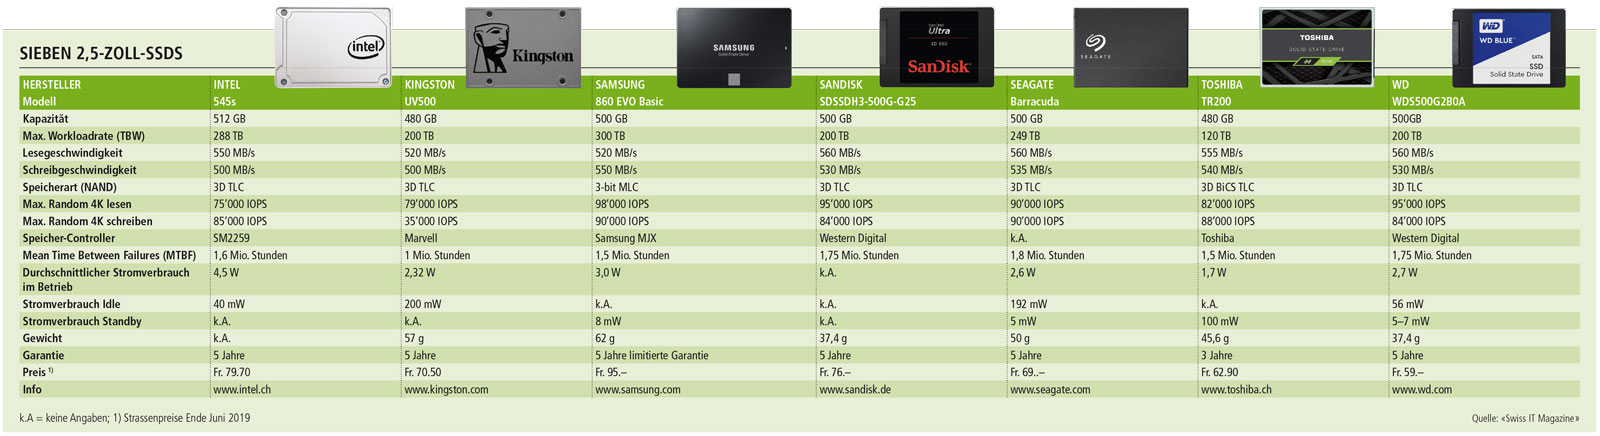 2,5-Zoll-SSDs mit SATA-Anschluss